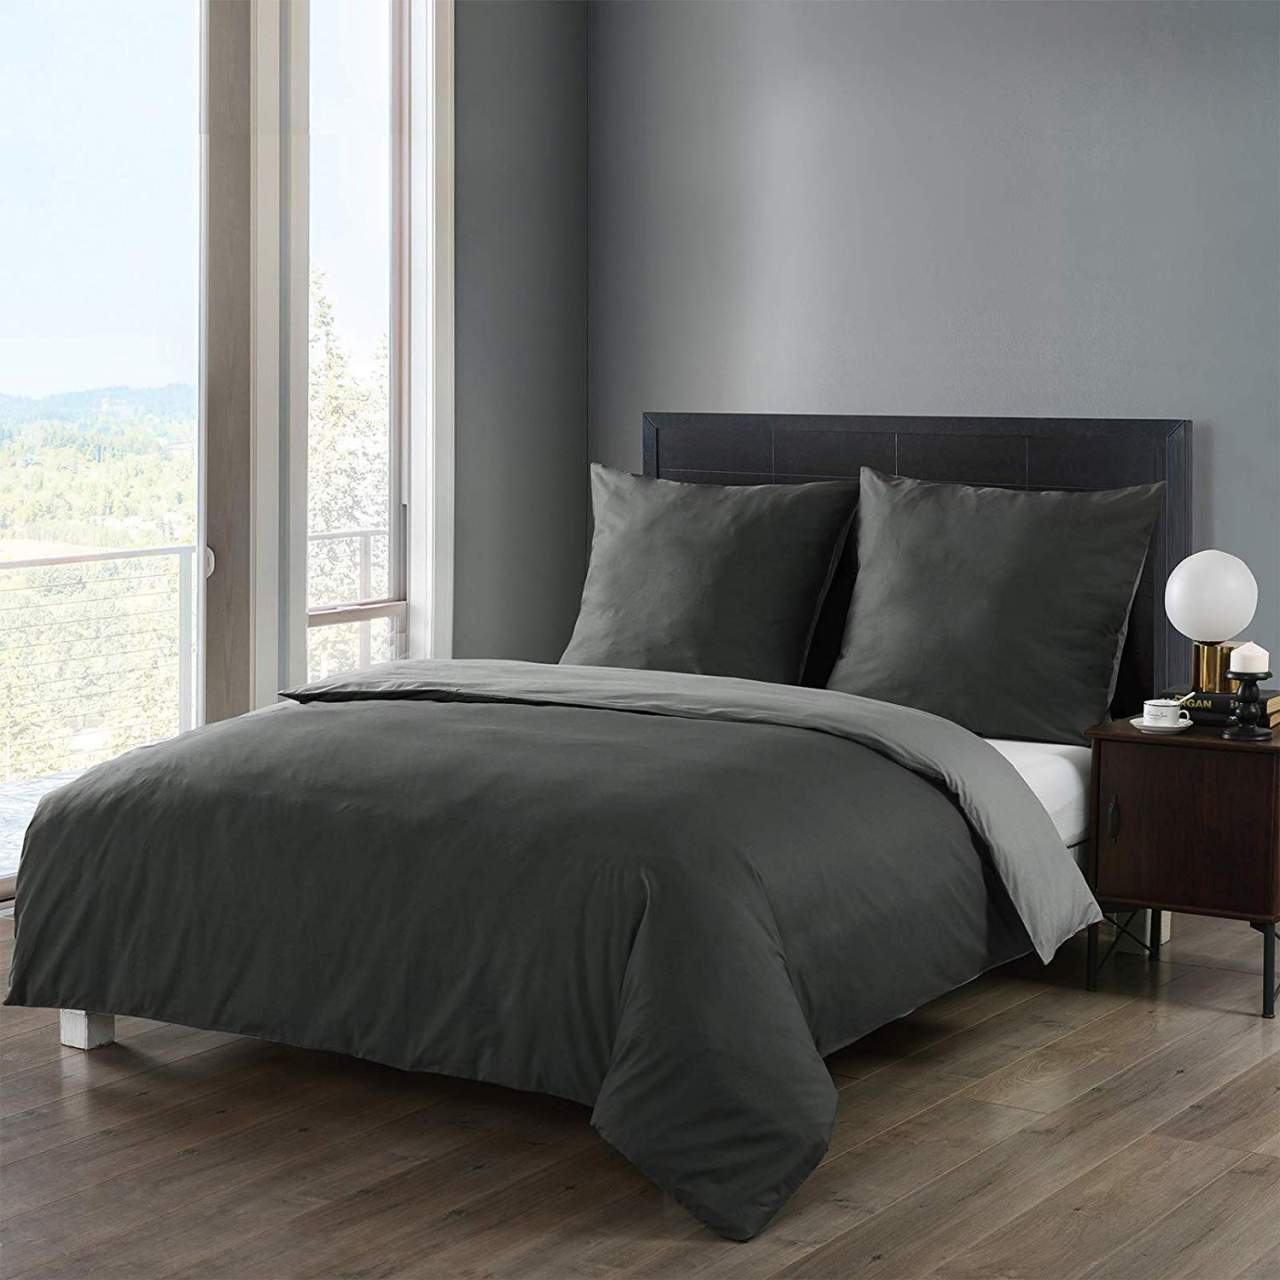 Bedding Duvet Cover Set Dark Gray Gray Cotton For Single Size Bed